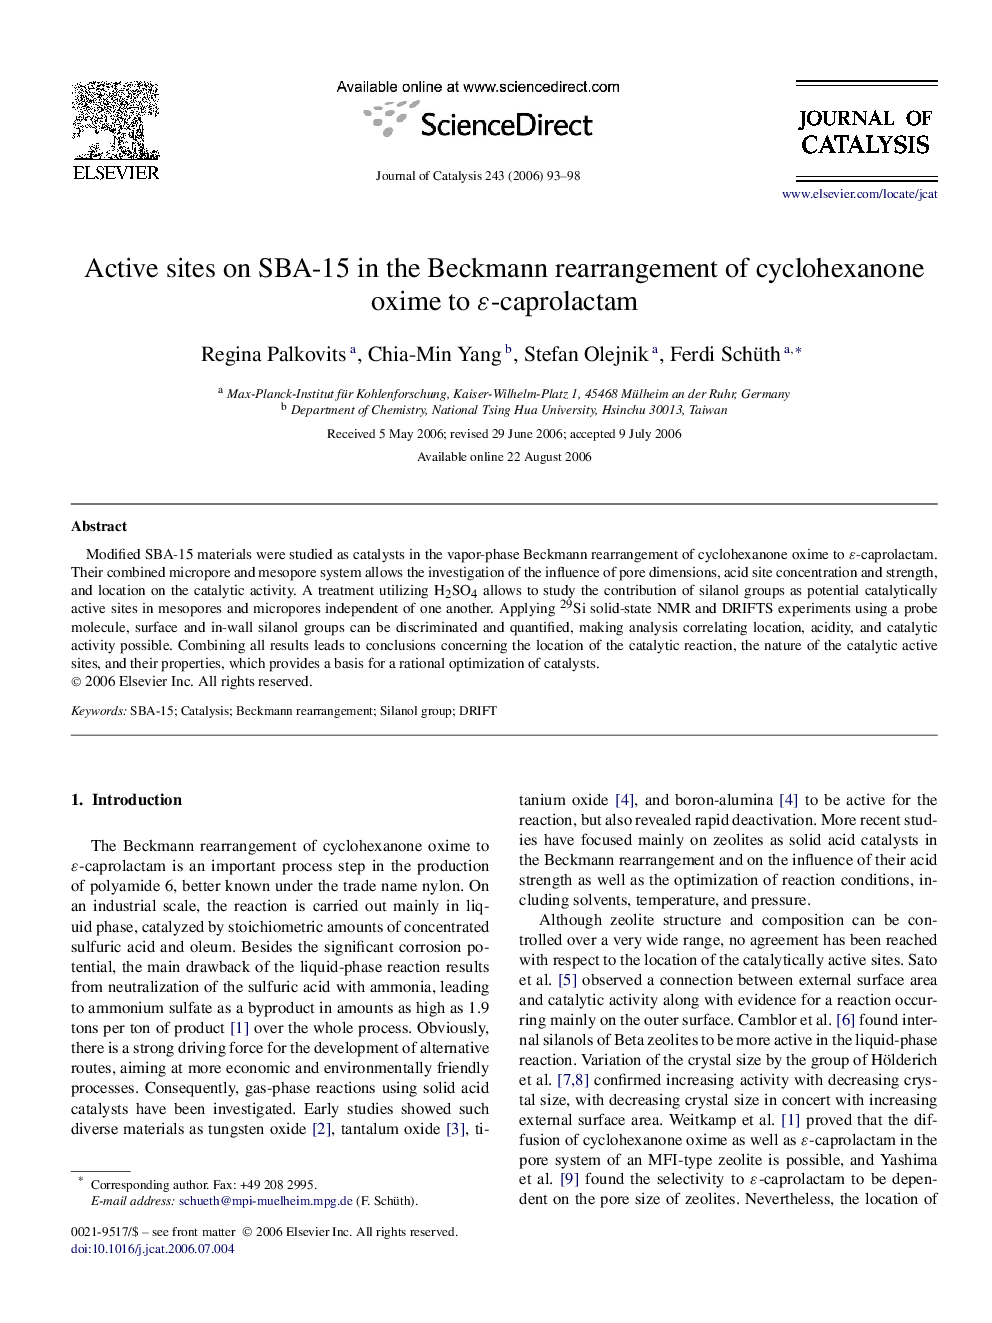 Active sites on SBA-15 in the Beckmann rearrangement of cyclohexanone oxime to ε-caprolactam